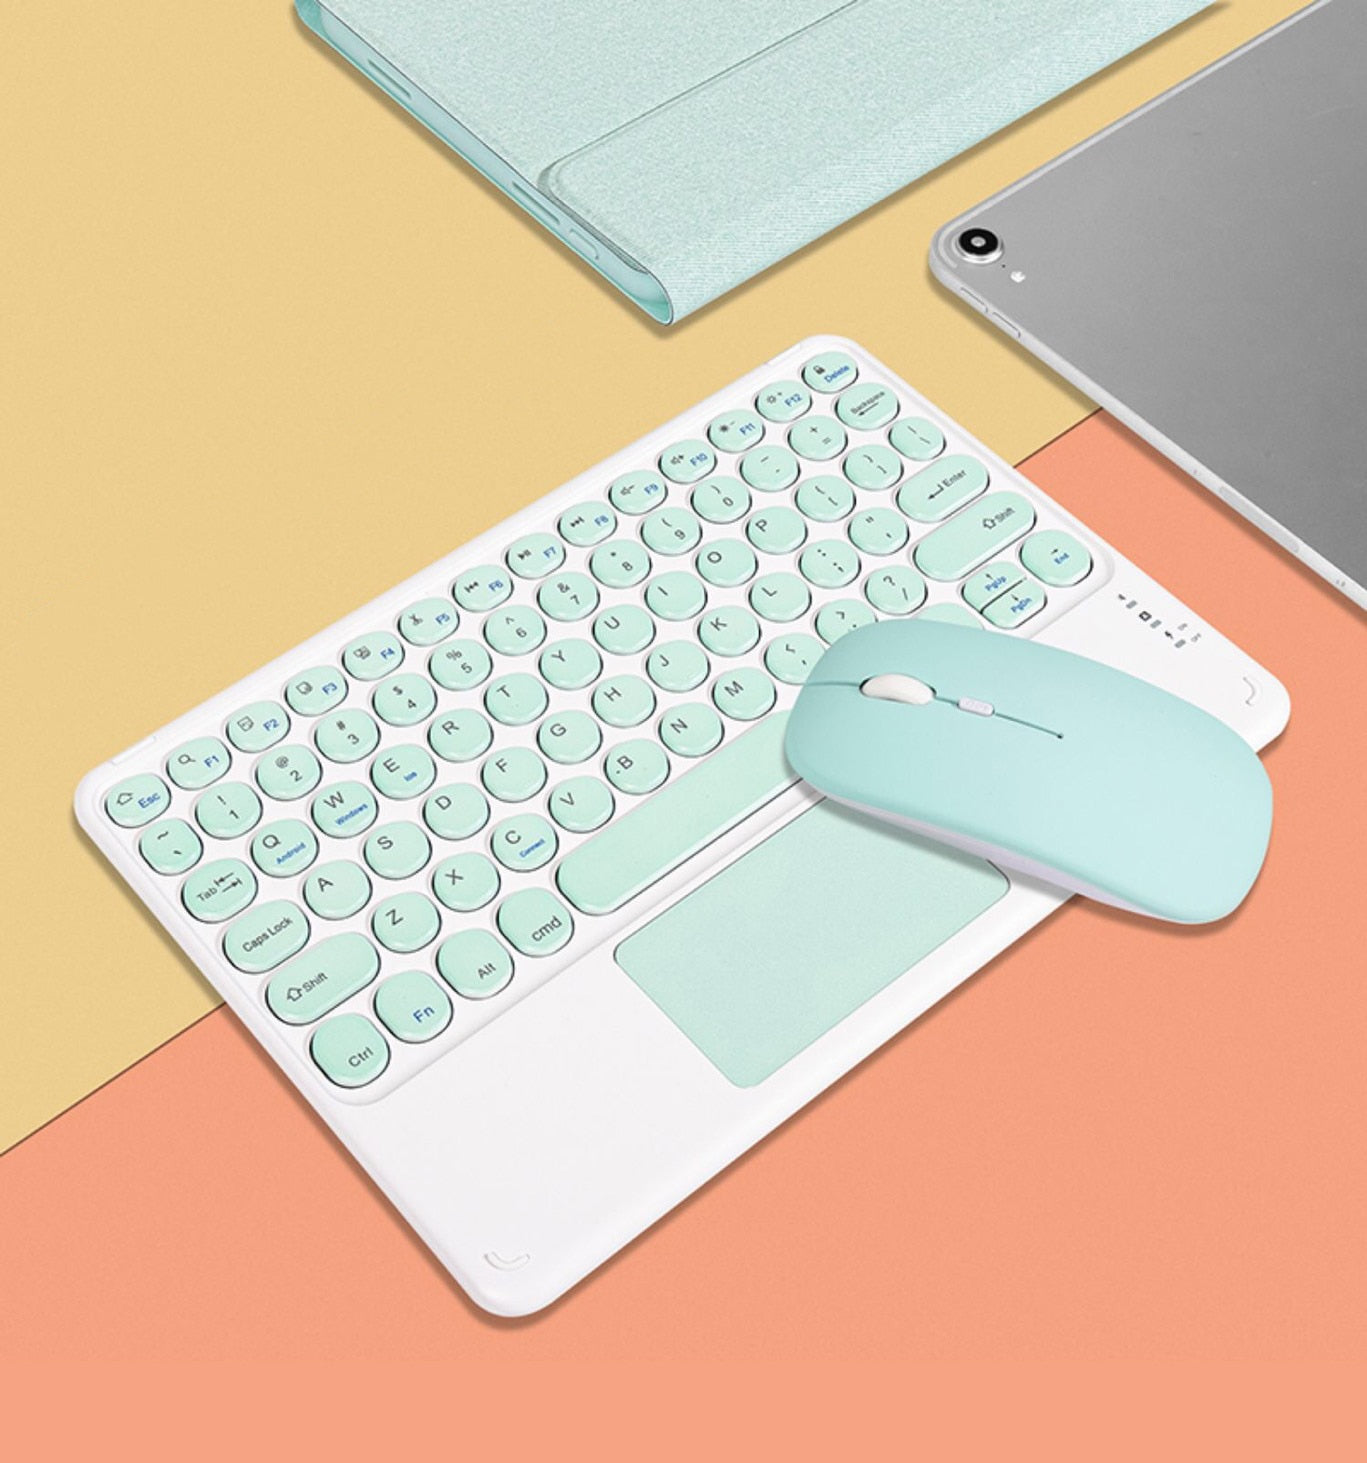 Keyboard and Mouse Combo | Wireless Bluetooth Keyboard Set - LittleCuckoo